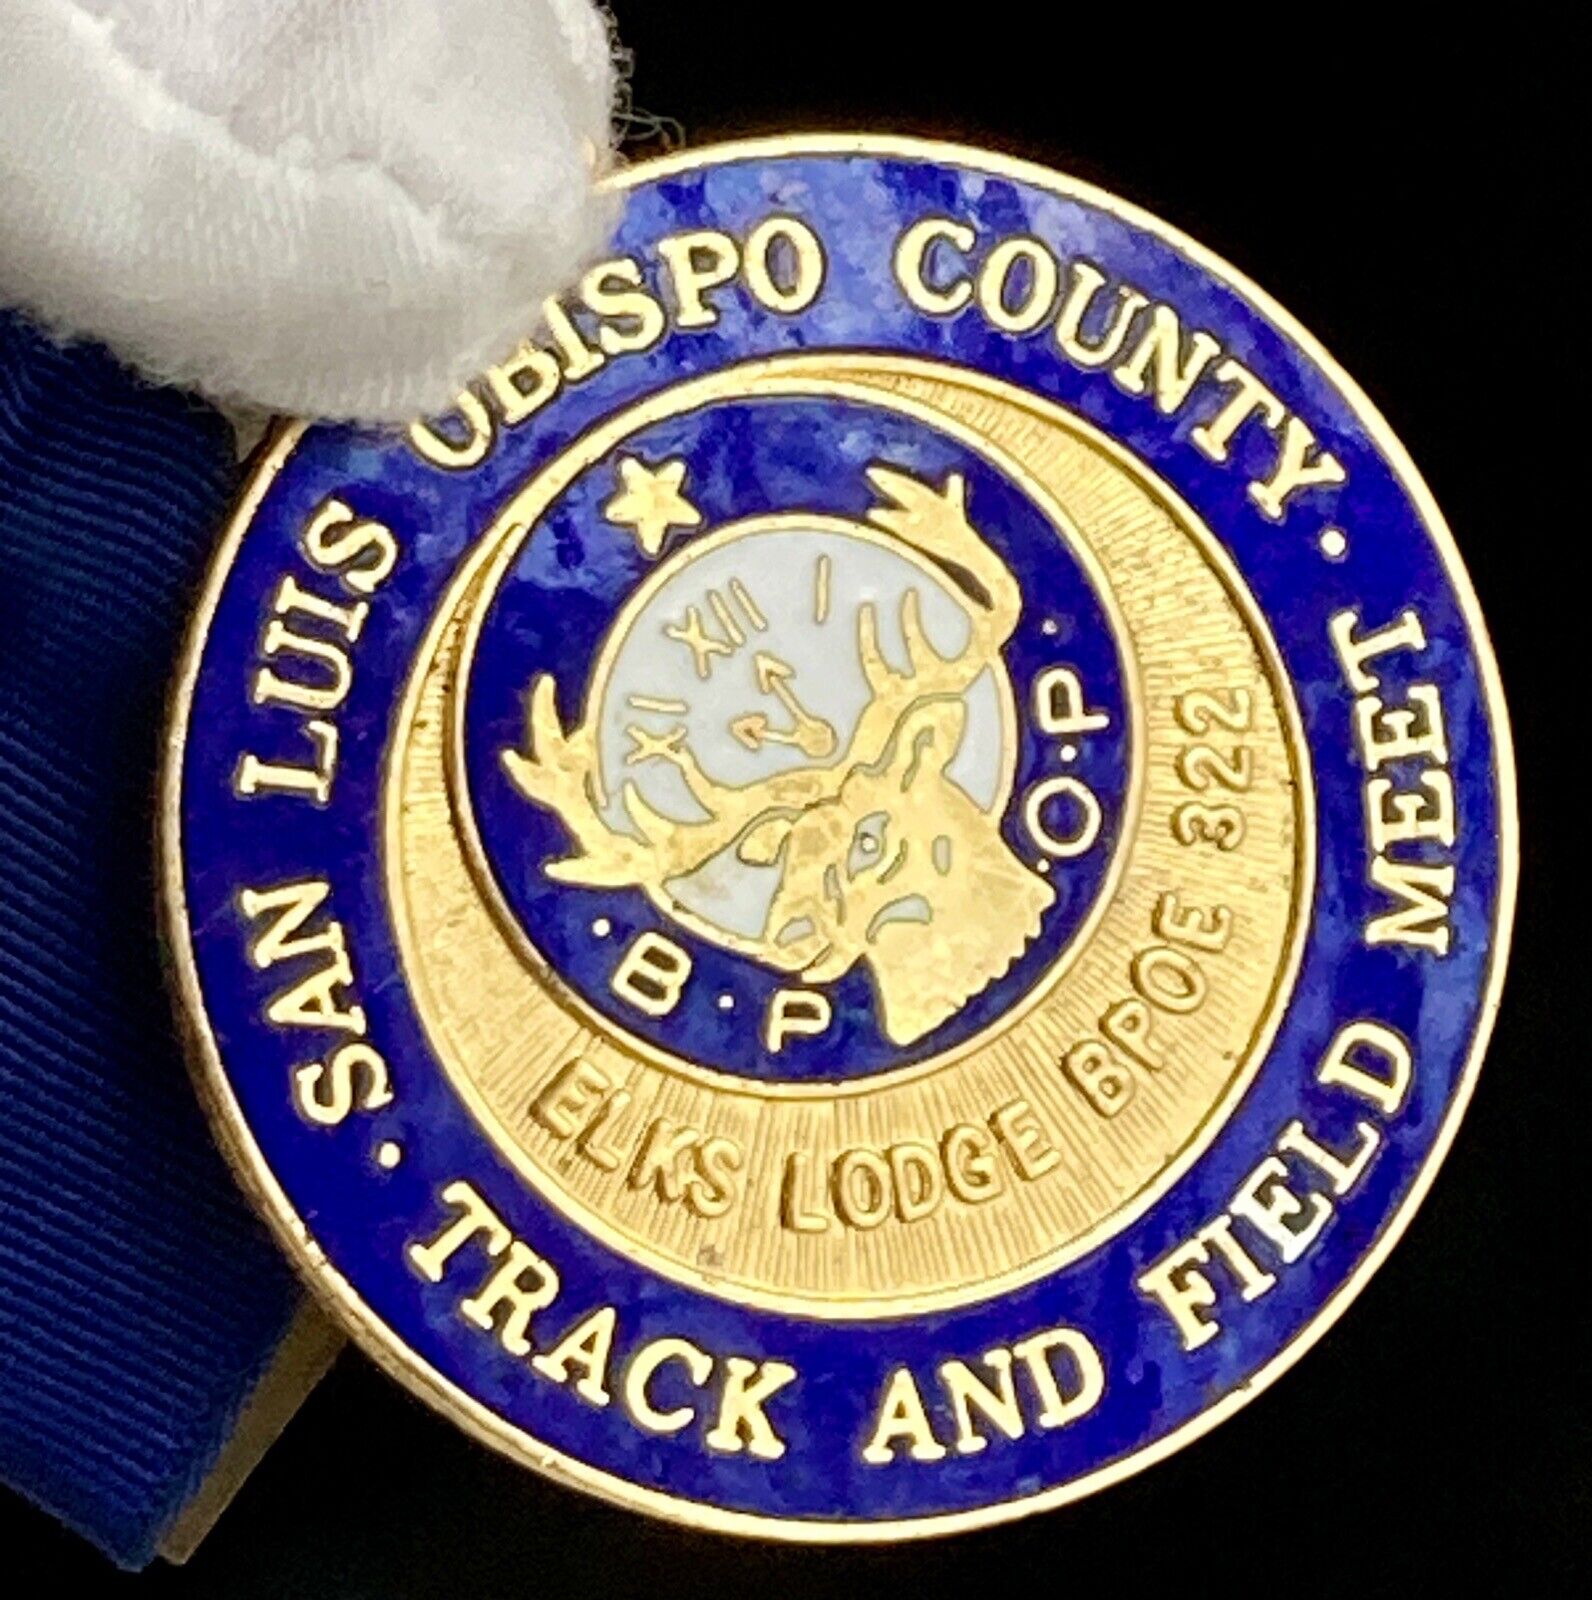 Elks Lodge Collectibles BPOE 322 San Luis OBISPO County Track & Field Meet Medal